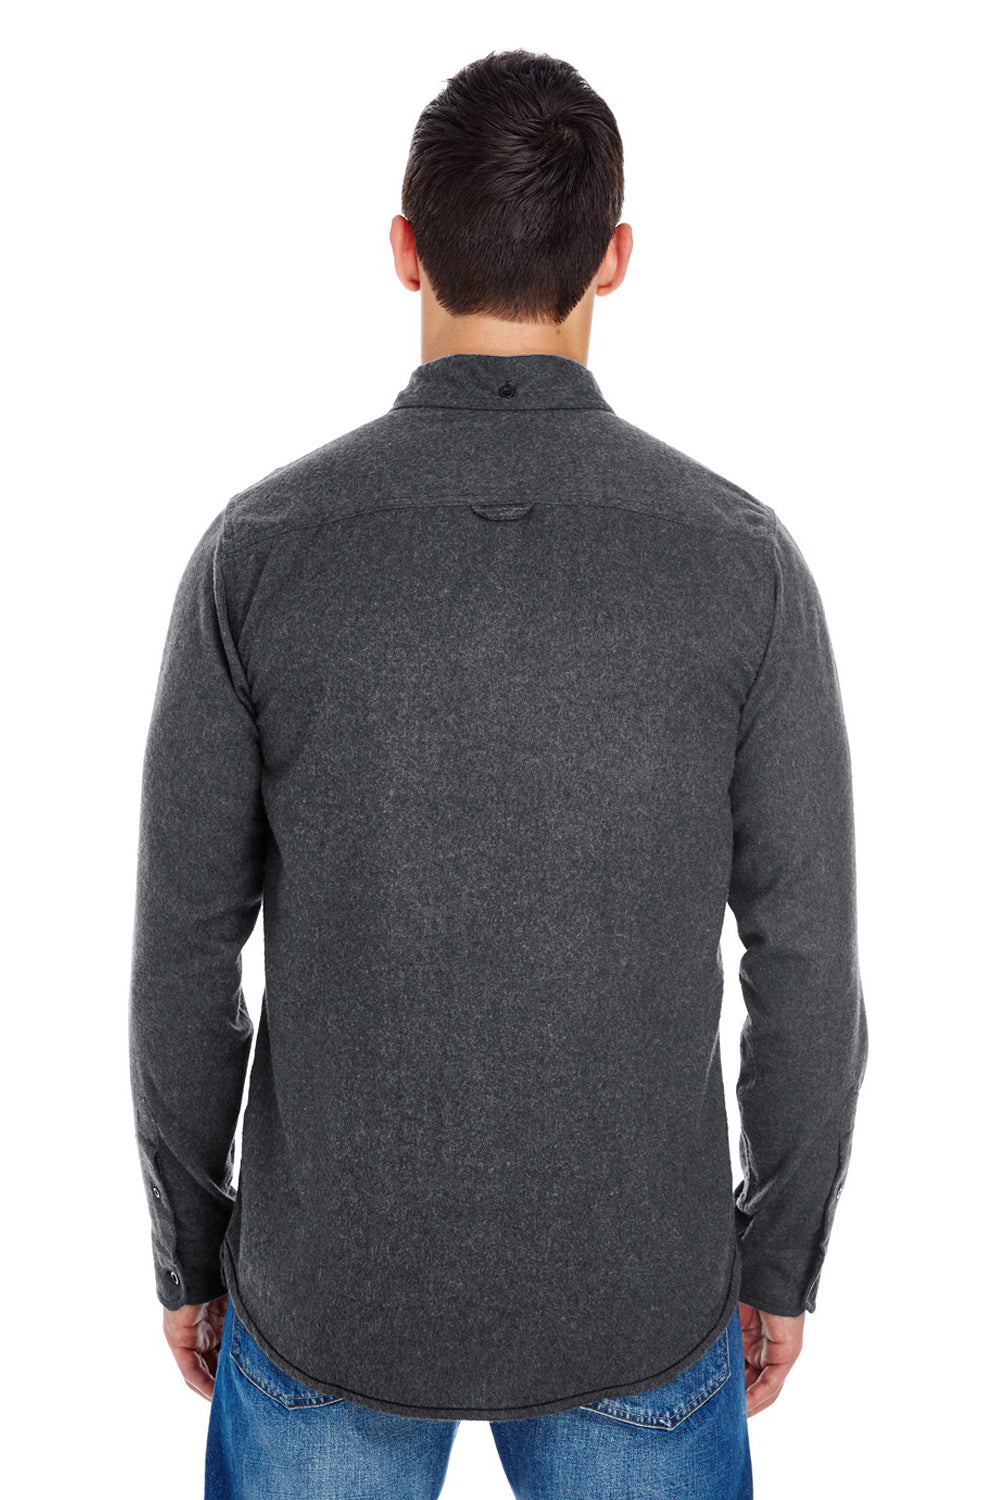 Burnside BU8200/8200 Mens Flannel Long Sleeve Button Down Shirt w/ Double Pockets Charcoal Grey Model Back